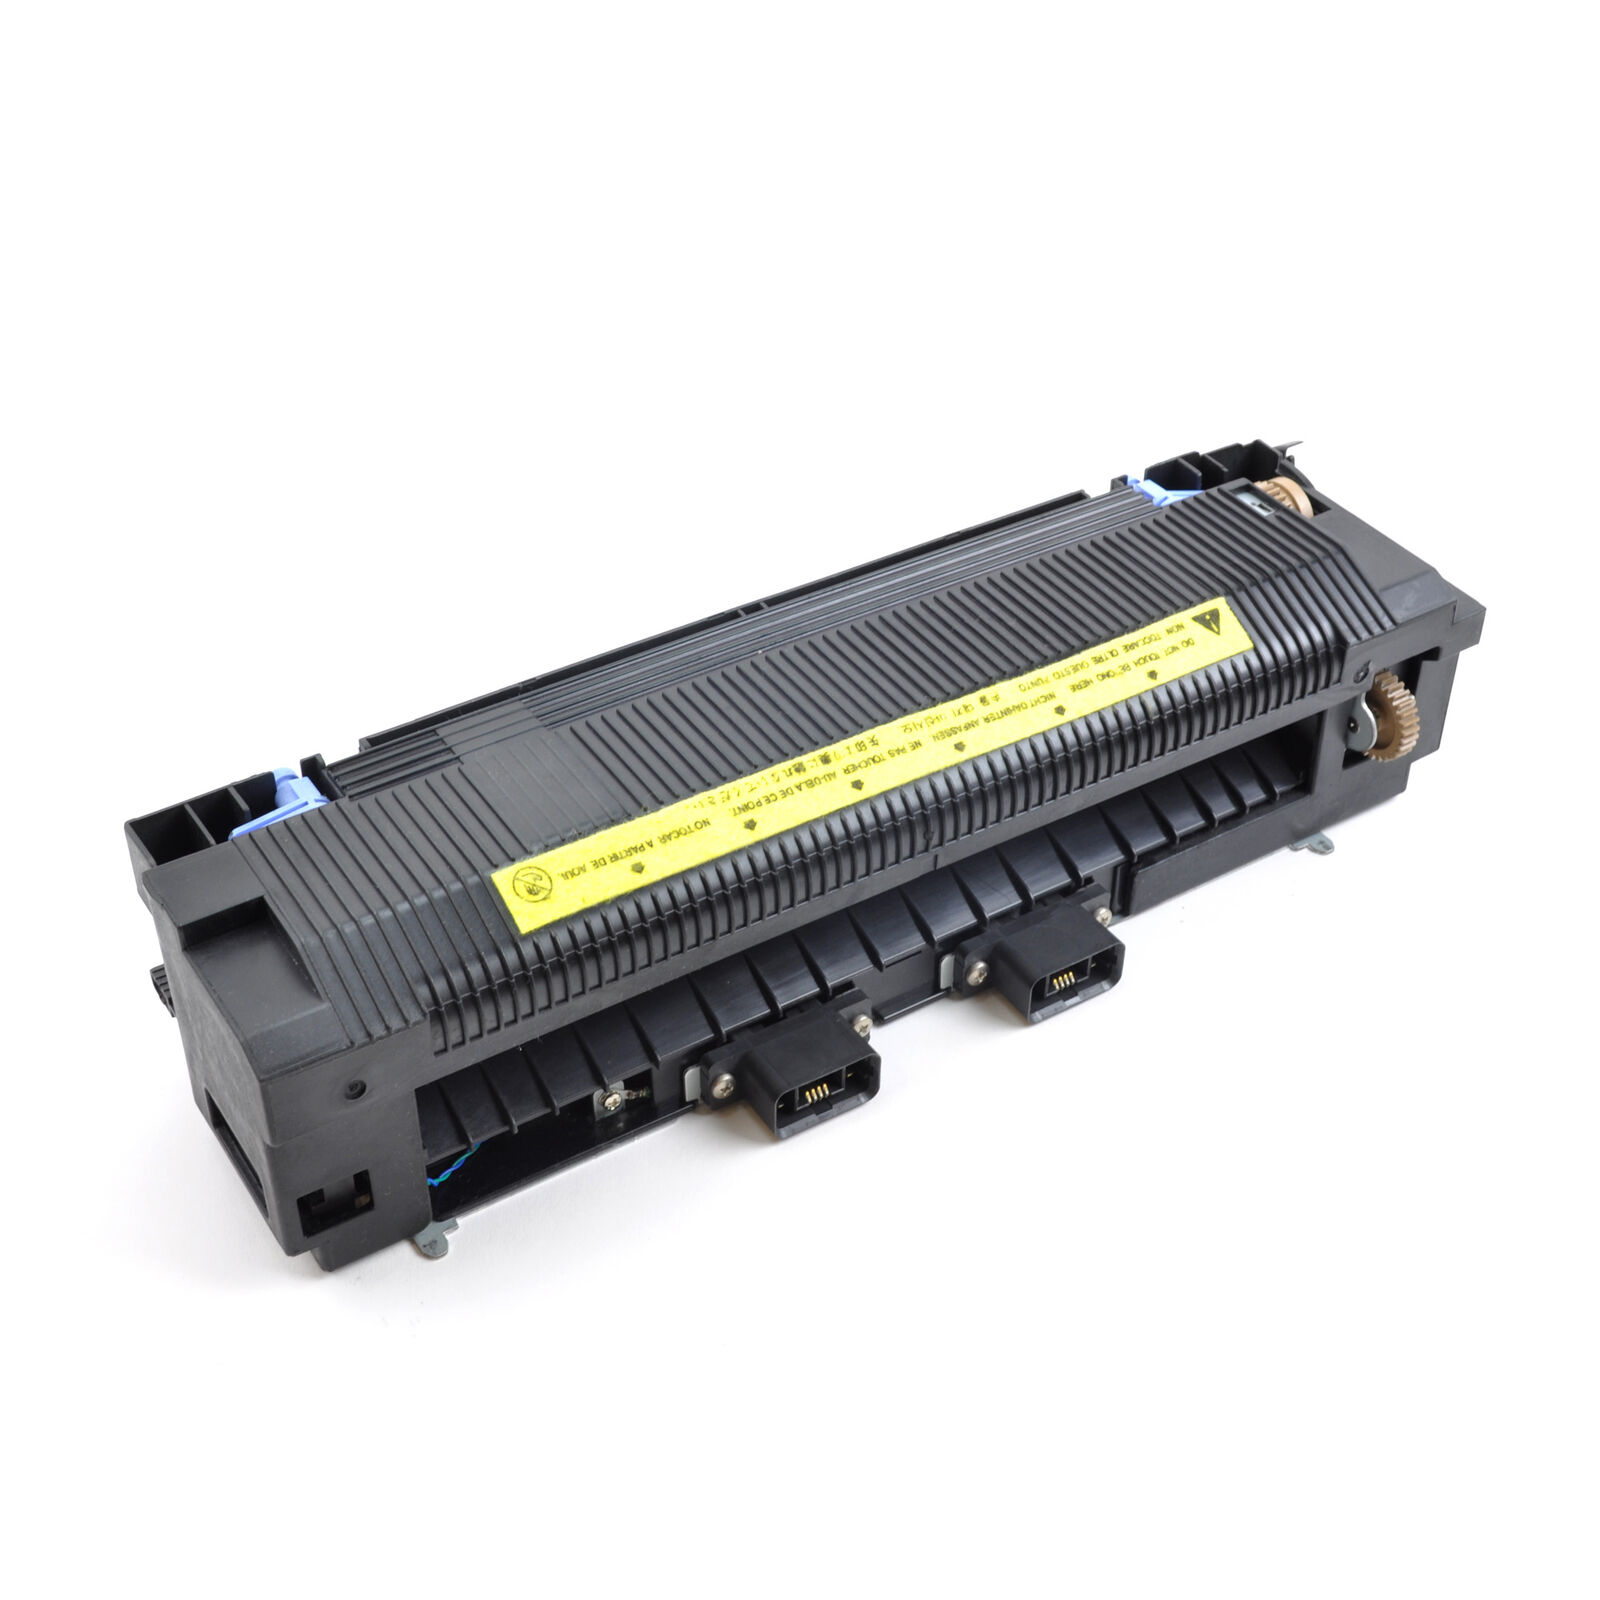 Printel RG5-4448-000 Fuser Assembly (220V) for HP LaserJet 5Si, LaserJet 8000